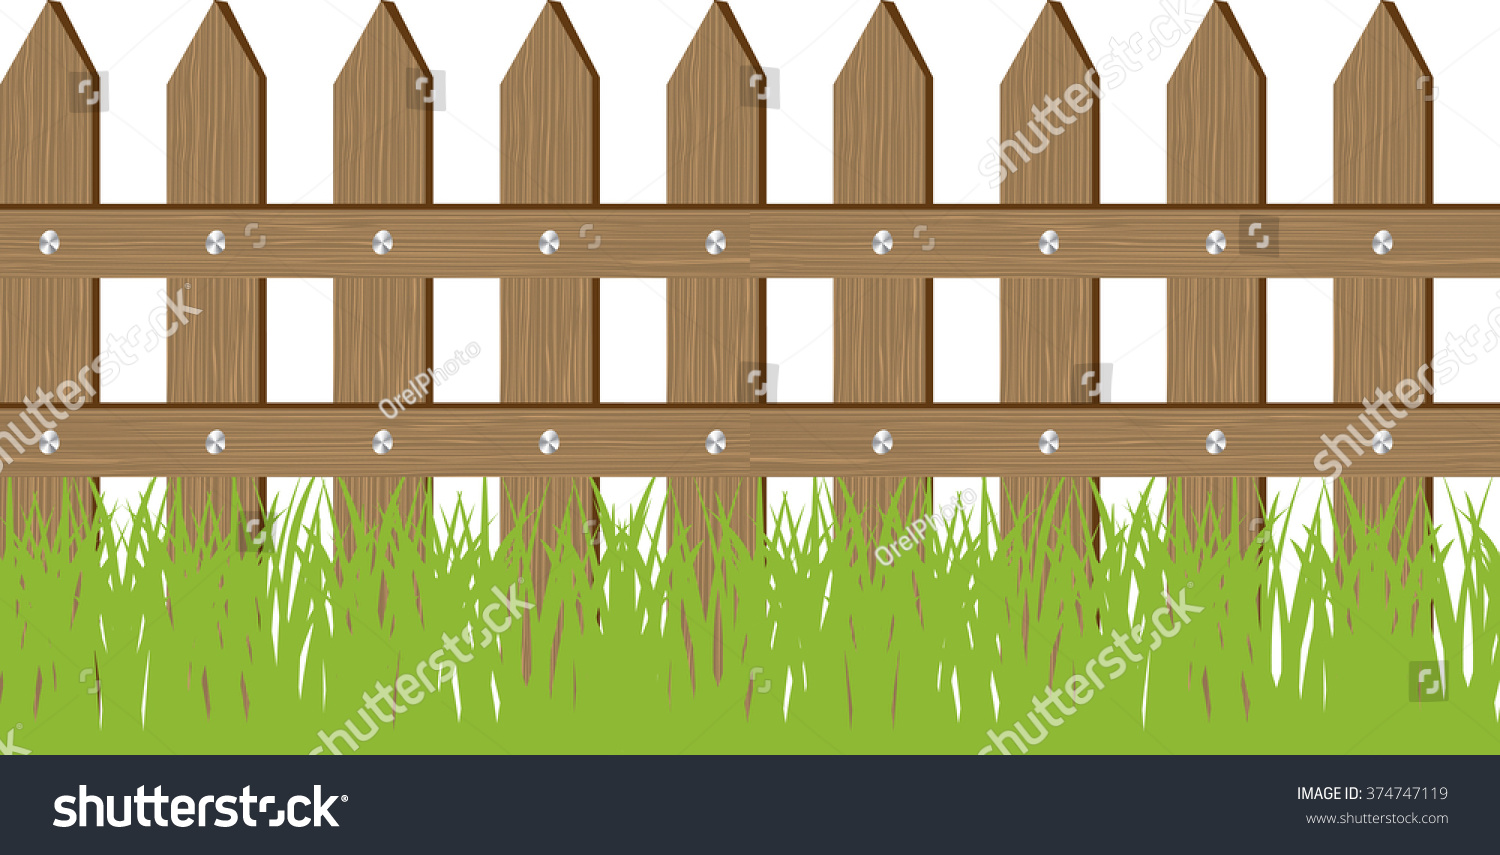 Vecto Illustration Grass Fence Stock Illustration Shutterstock